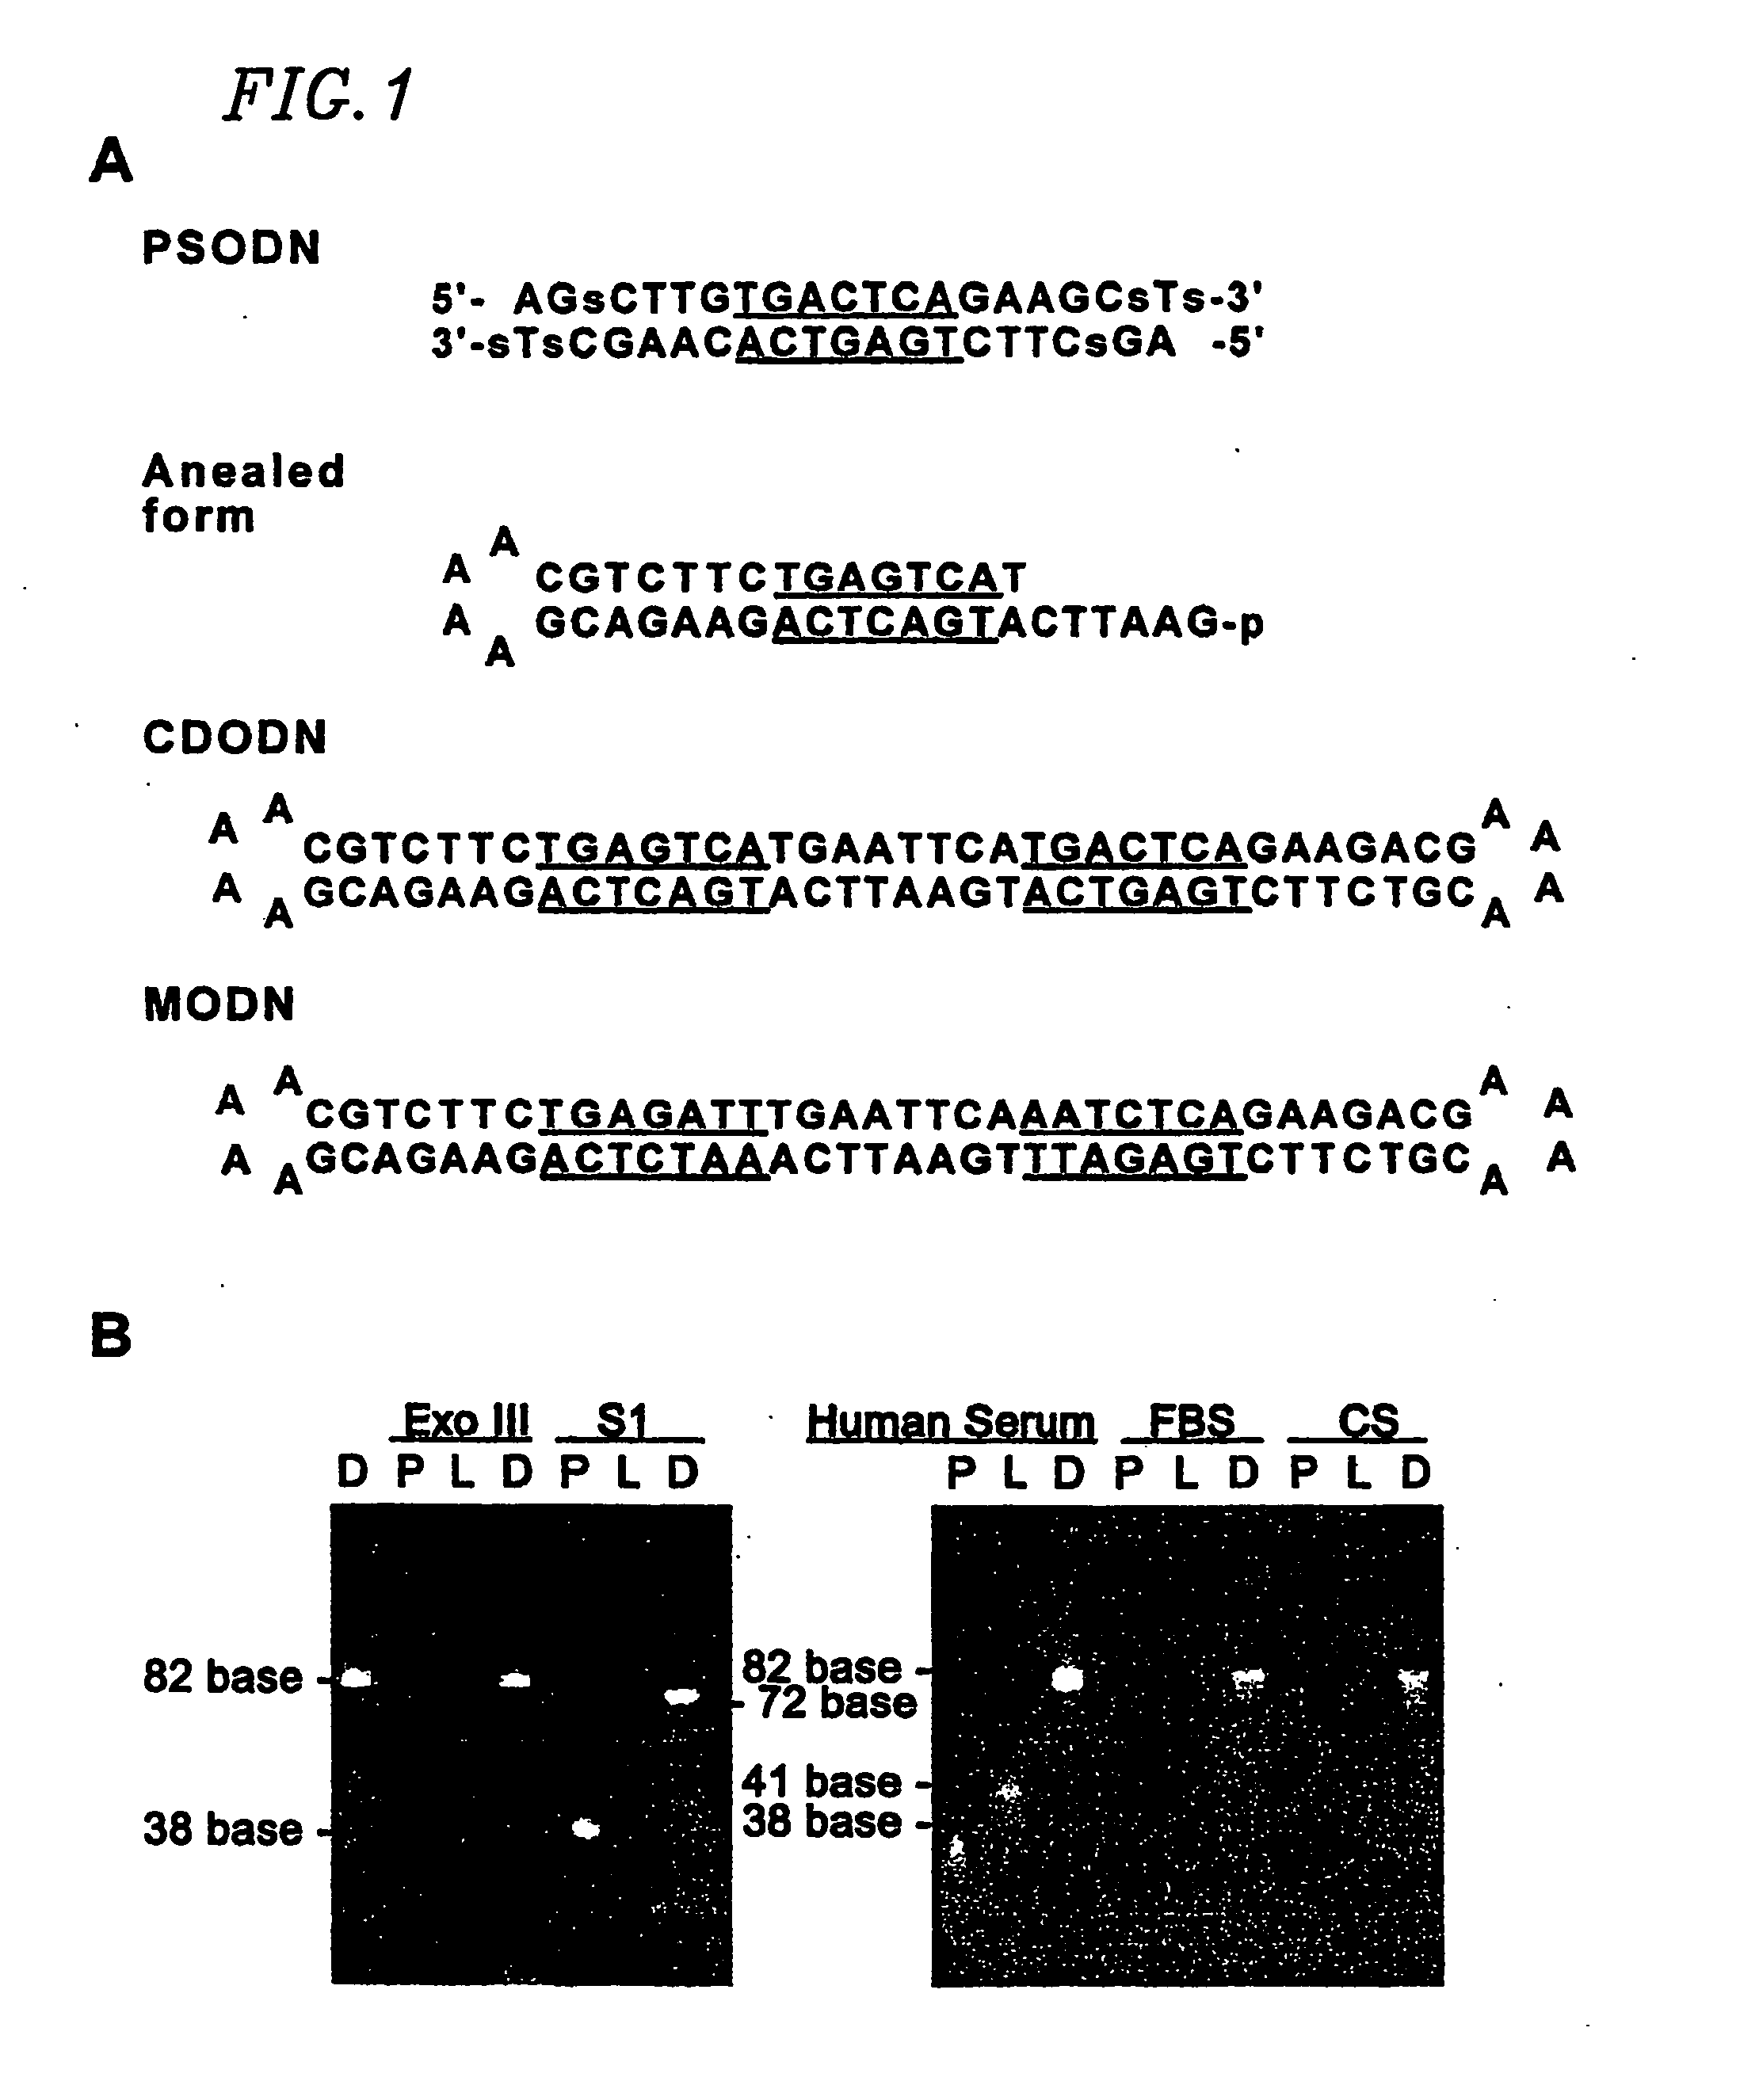 Circular dumbbell decoy oligodeoxynucleotides (cdodn) containing dna bindings sites of transcription